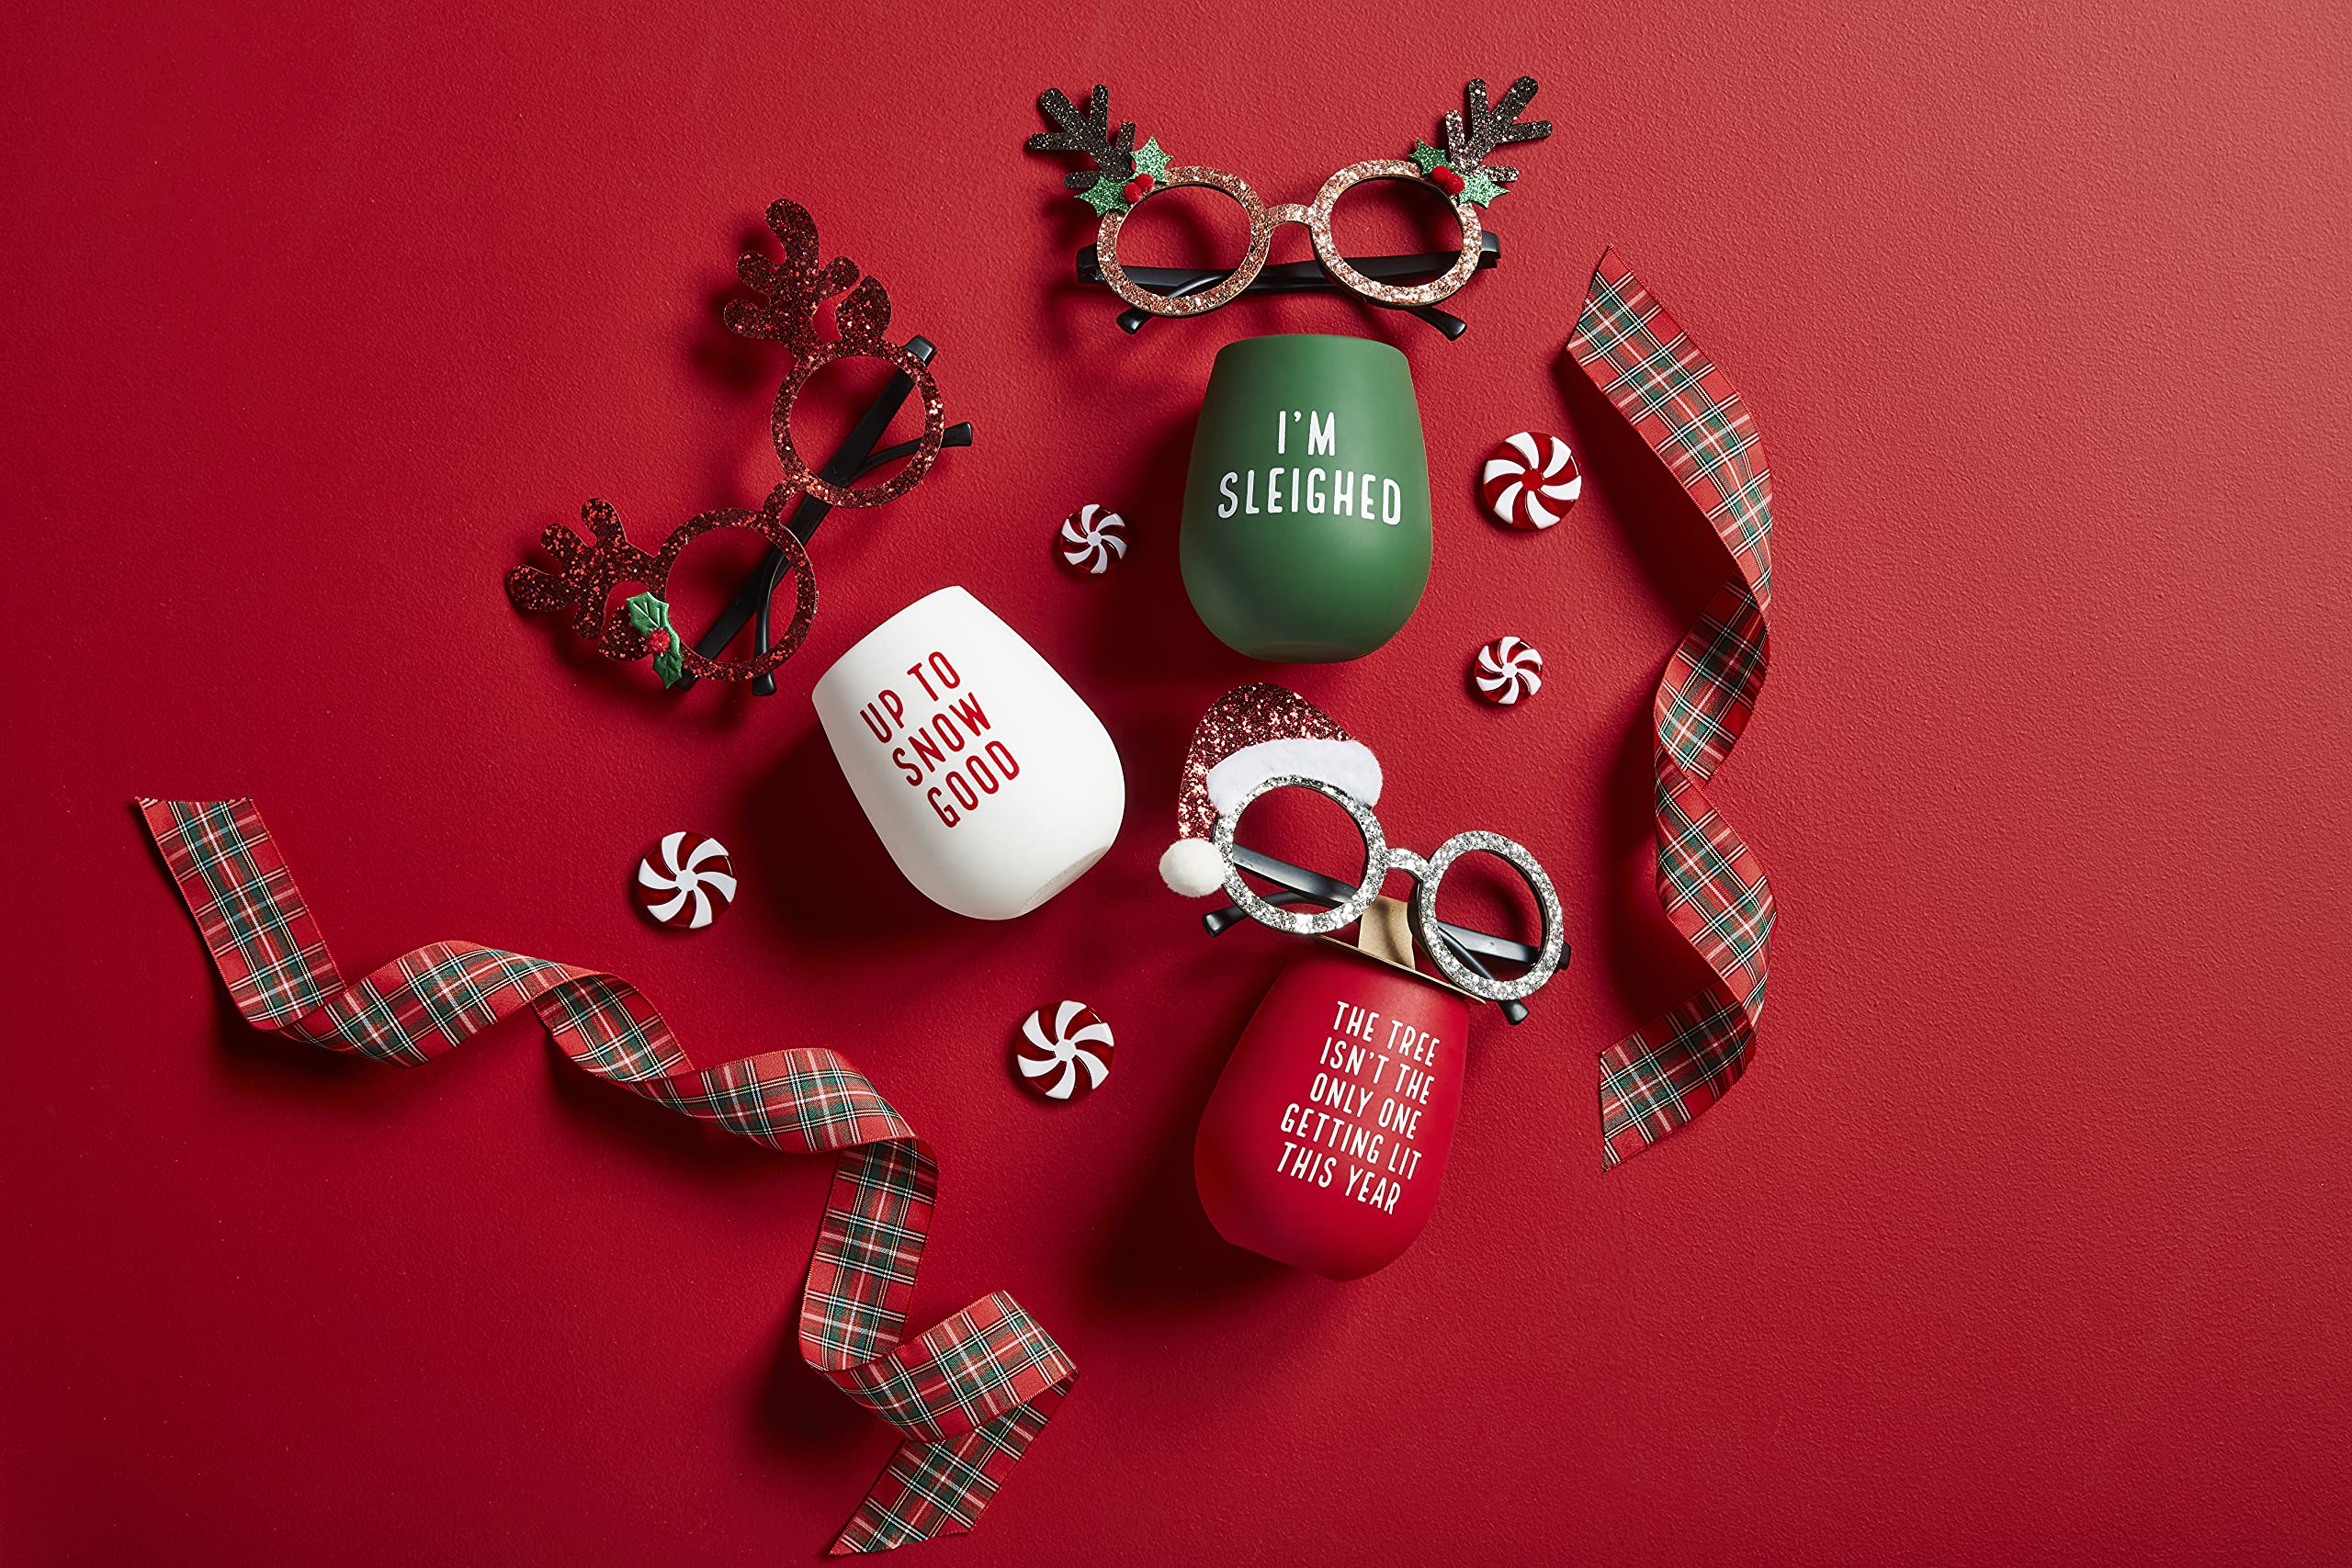 Mud Pie, Tree, Funny Adult Christmas Silicone Wine Glass Set, 16 oz, sunglasses 4 1/2" x 3 1/2"